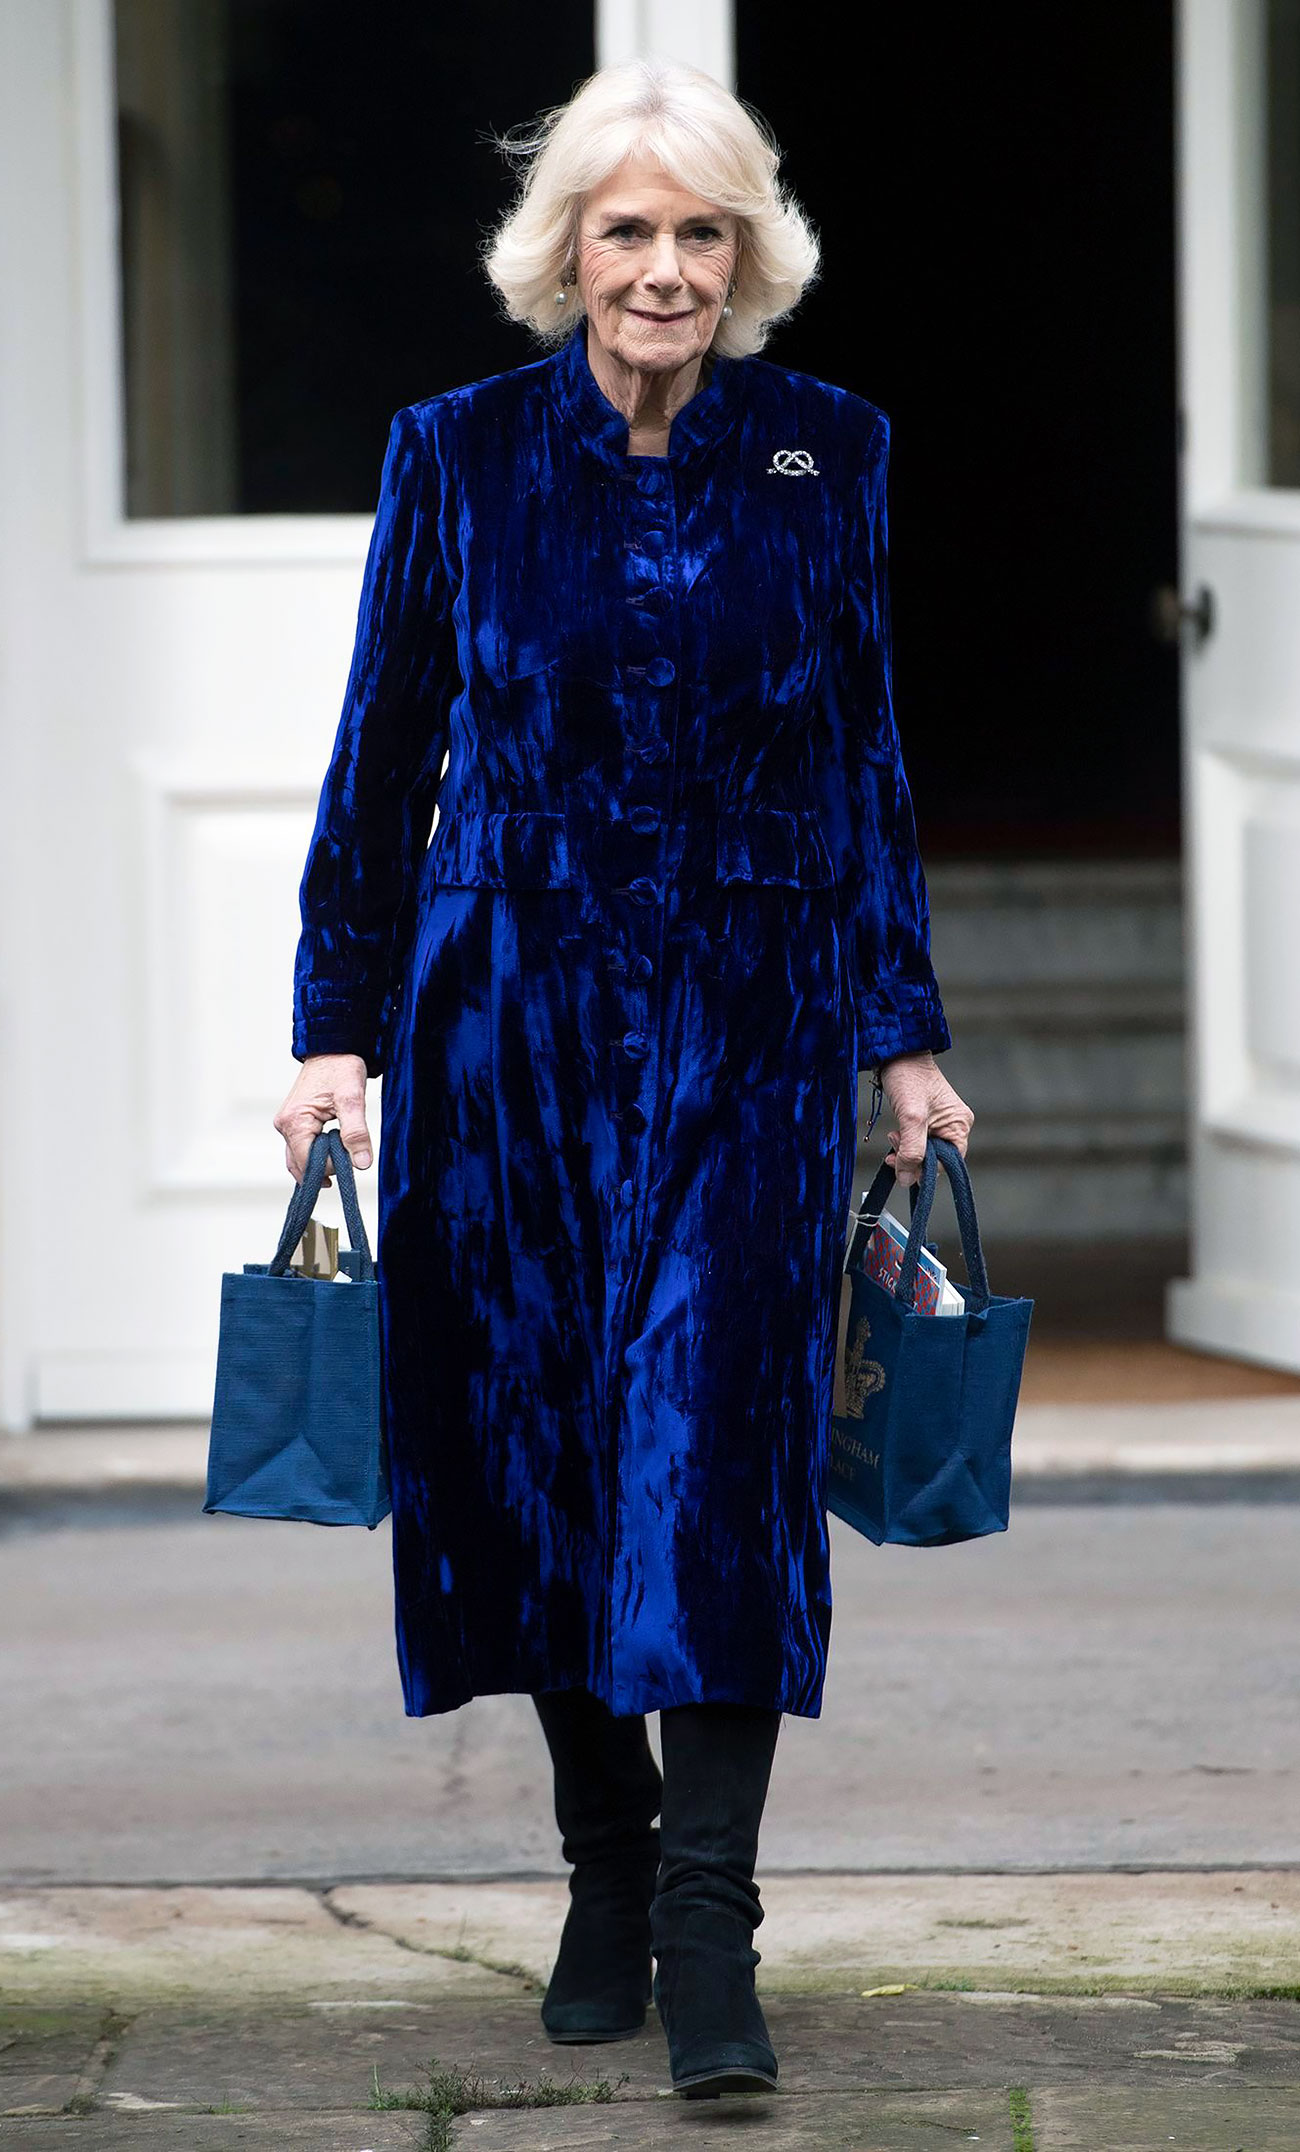 Camilla, Duchess of Cornwall: 'Perfect outfit of choice' - royal stuns  alongside Charles